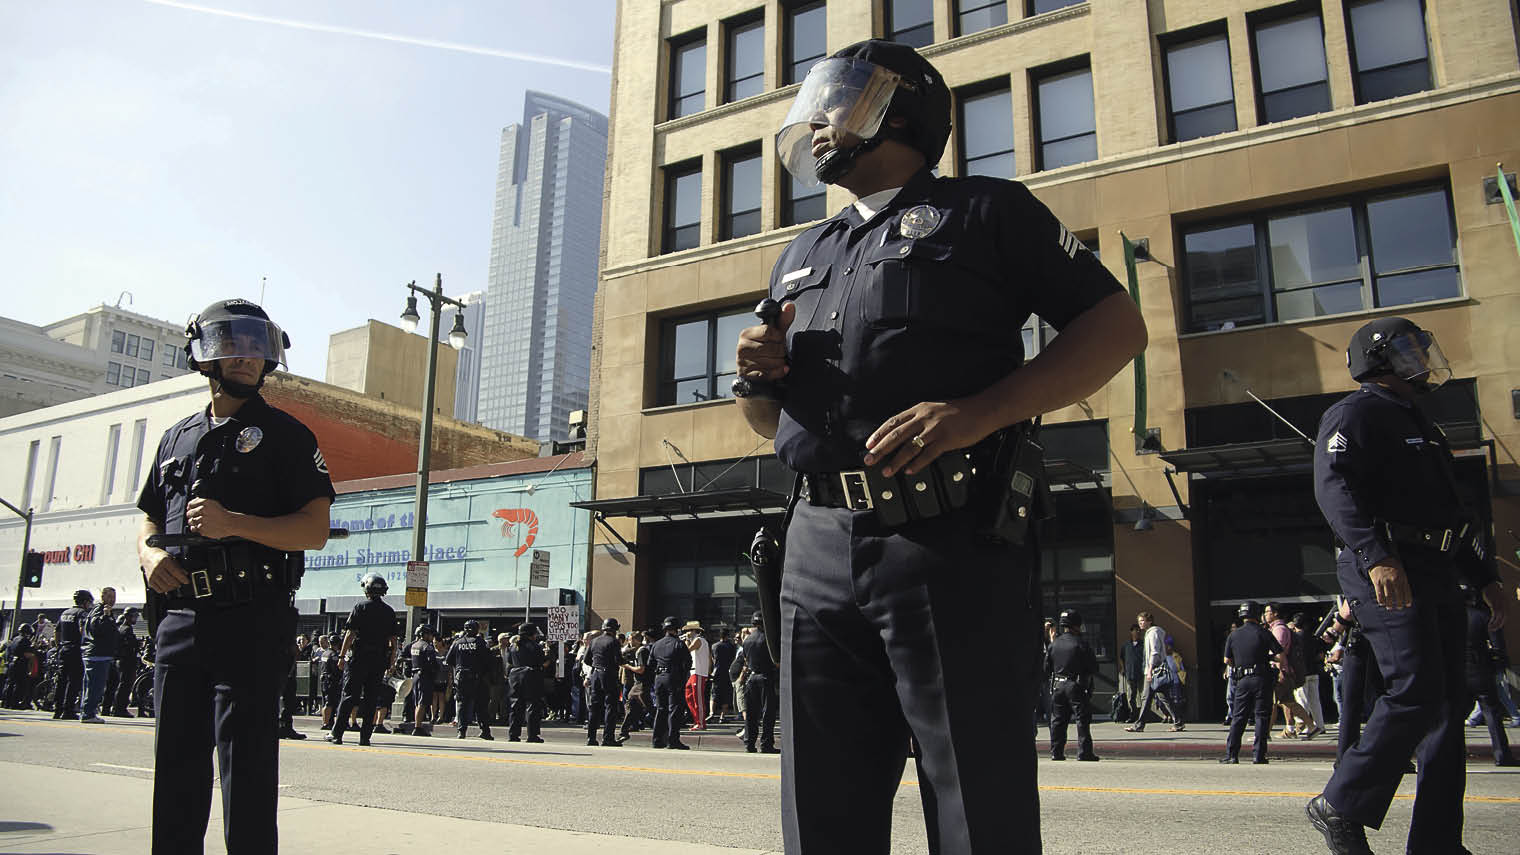 City troubles - predictive policing